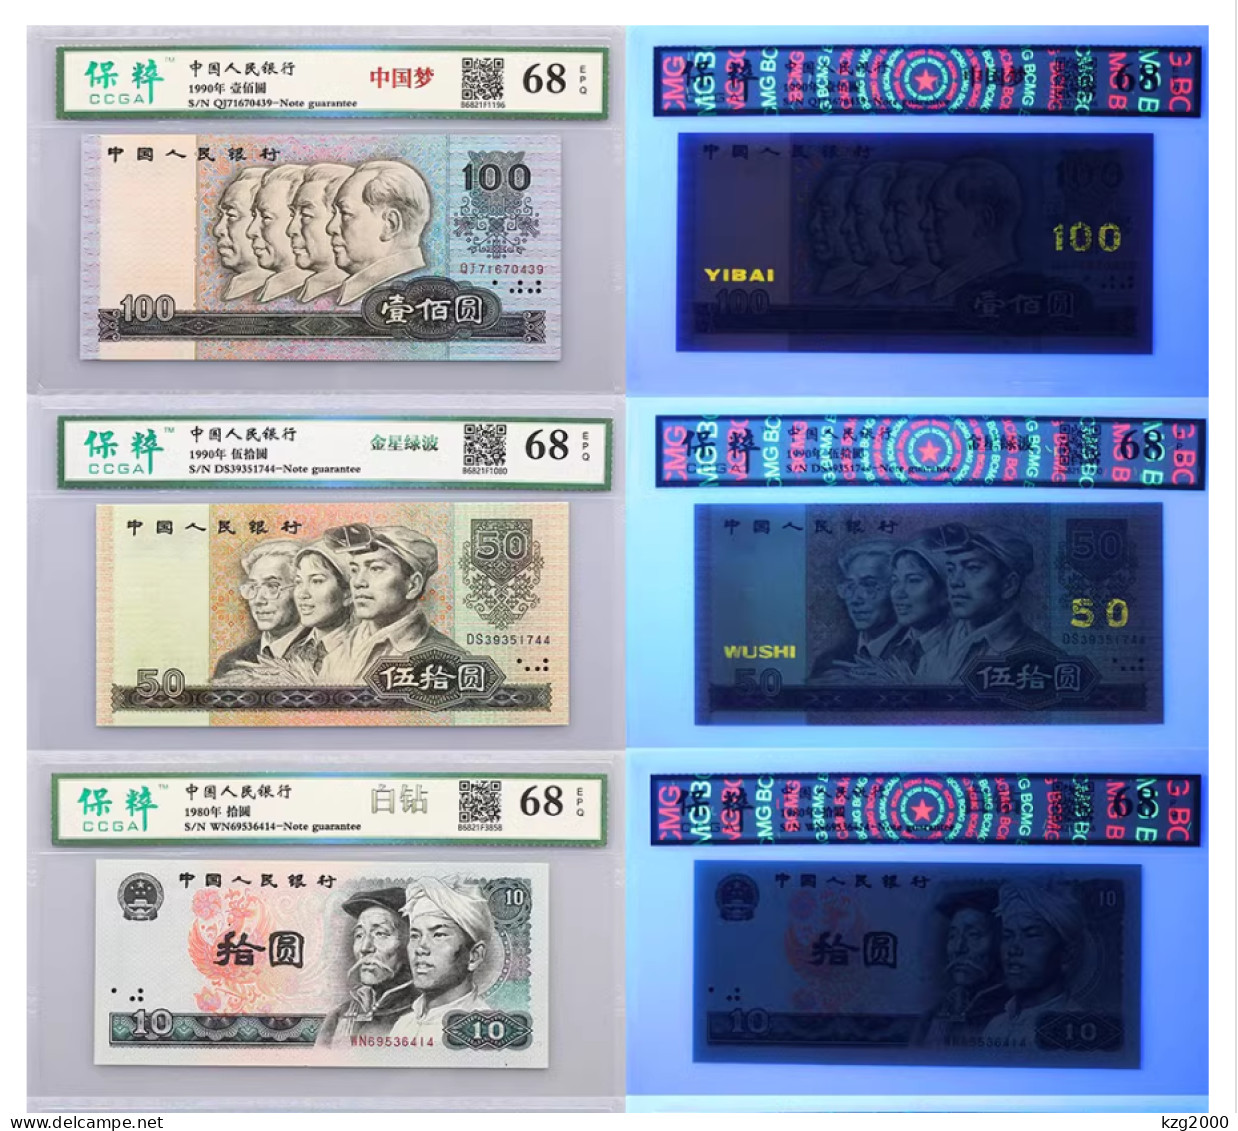 China Banknote 1980 The 4th Set Of RMB Paper Money Fluorescent Version Full Set Of 27 Sheets Banknotes 27Pcs - China